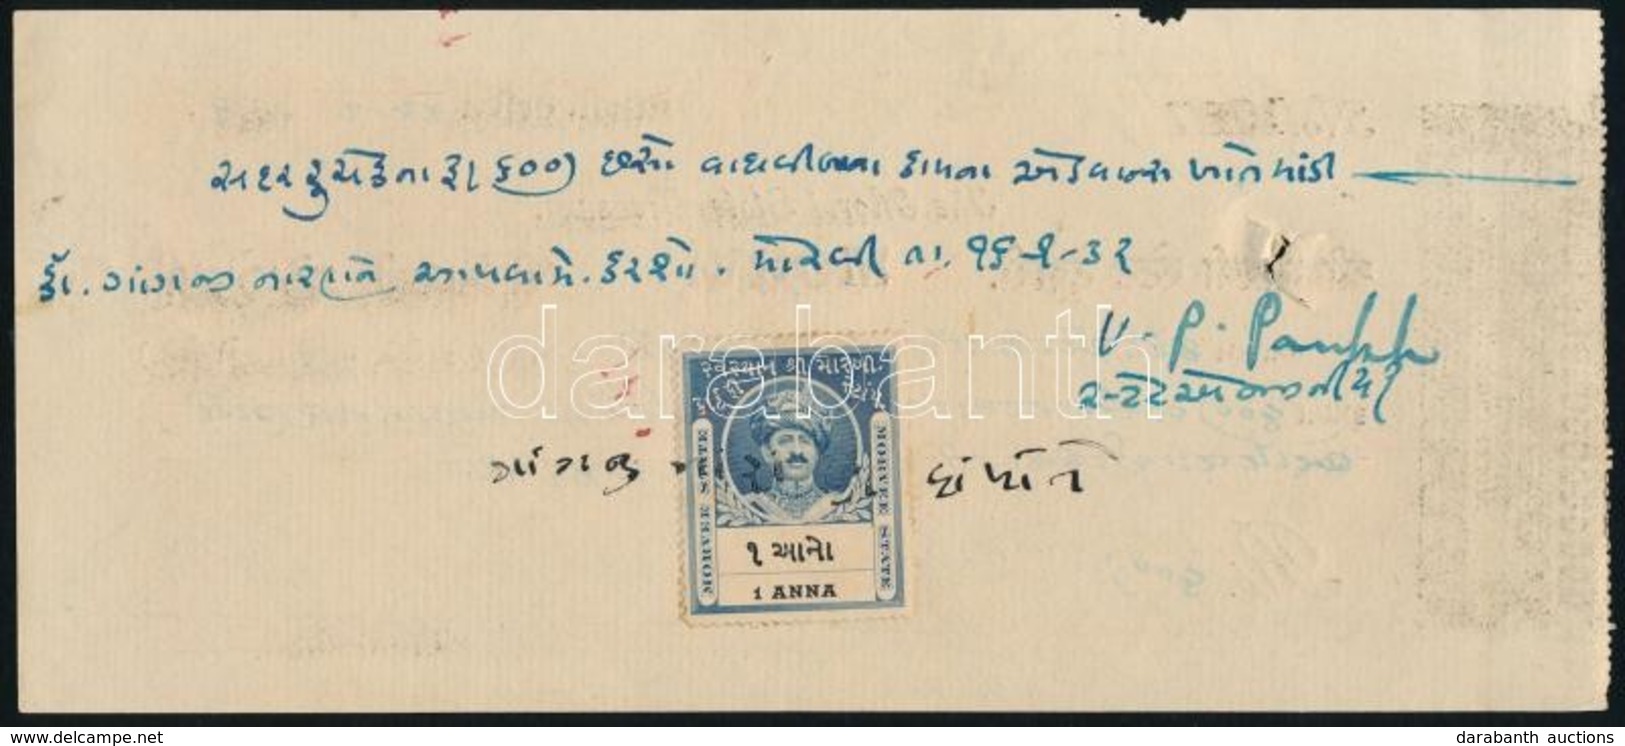 Cca 1943 India, Mowri állam Csekk, 1A Illetékbélyeggel / India Cheque With Document Stamp - Non Classificati